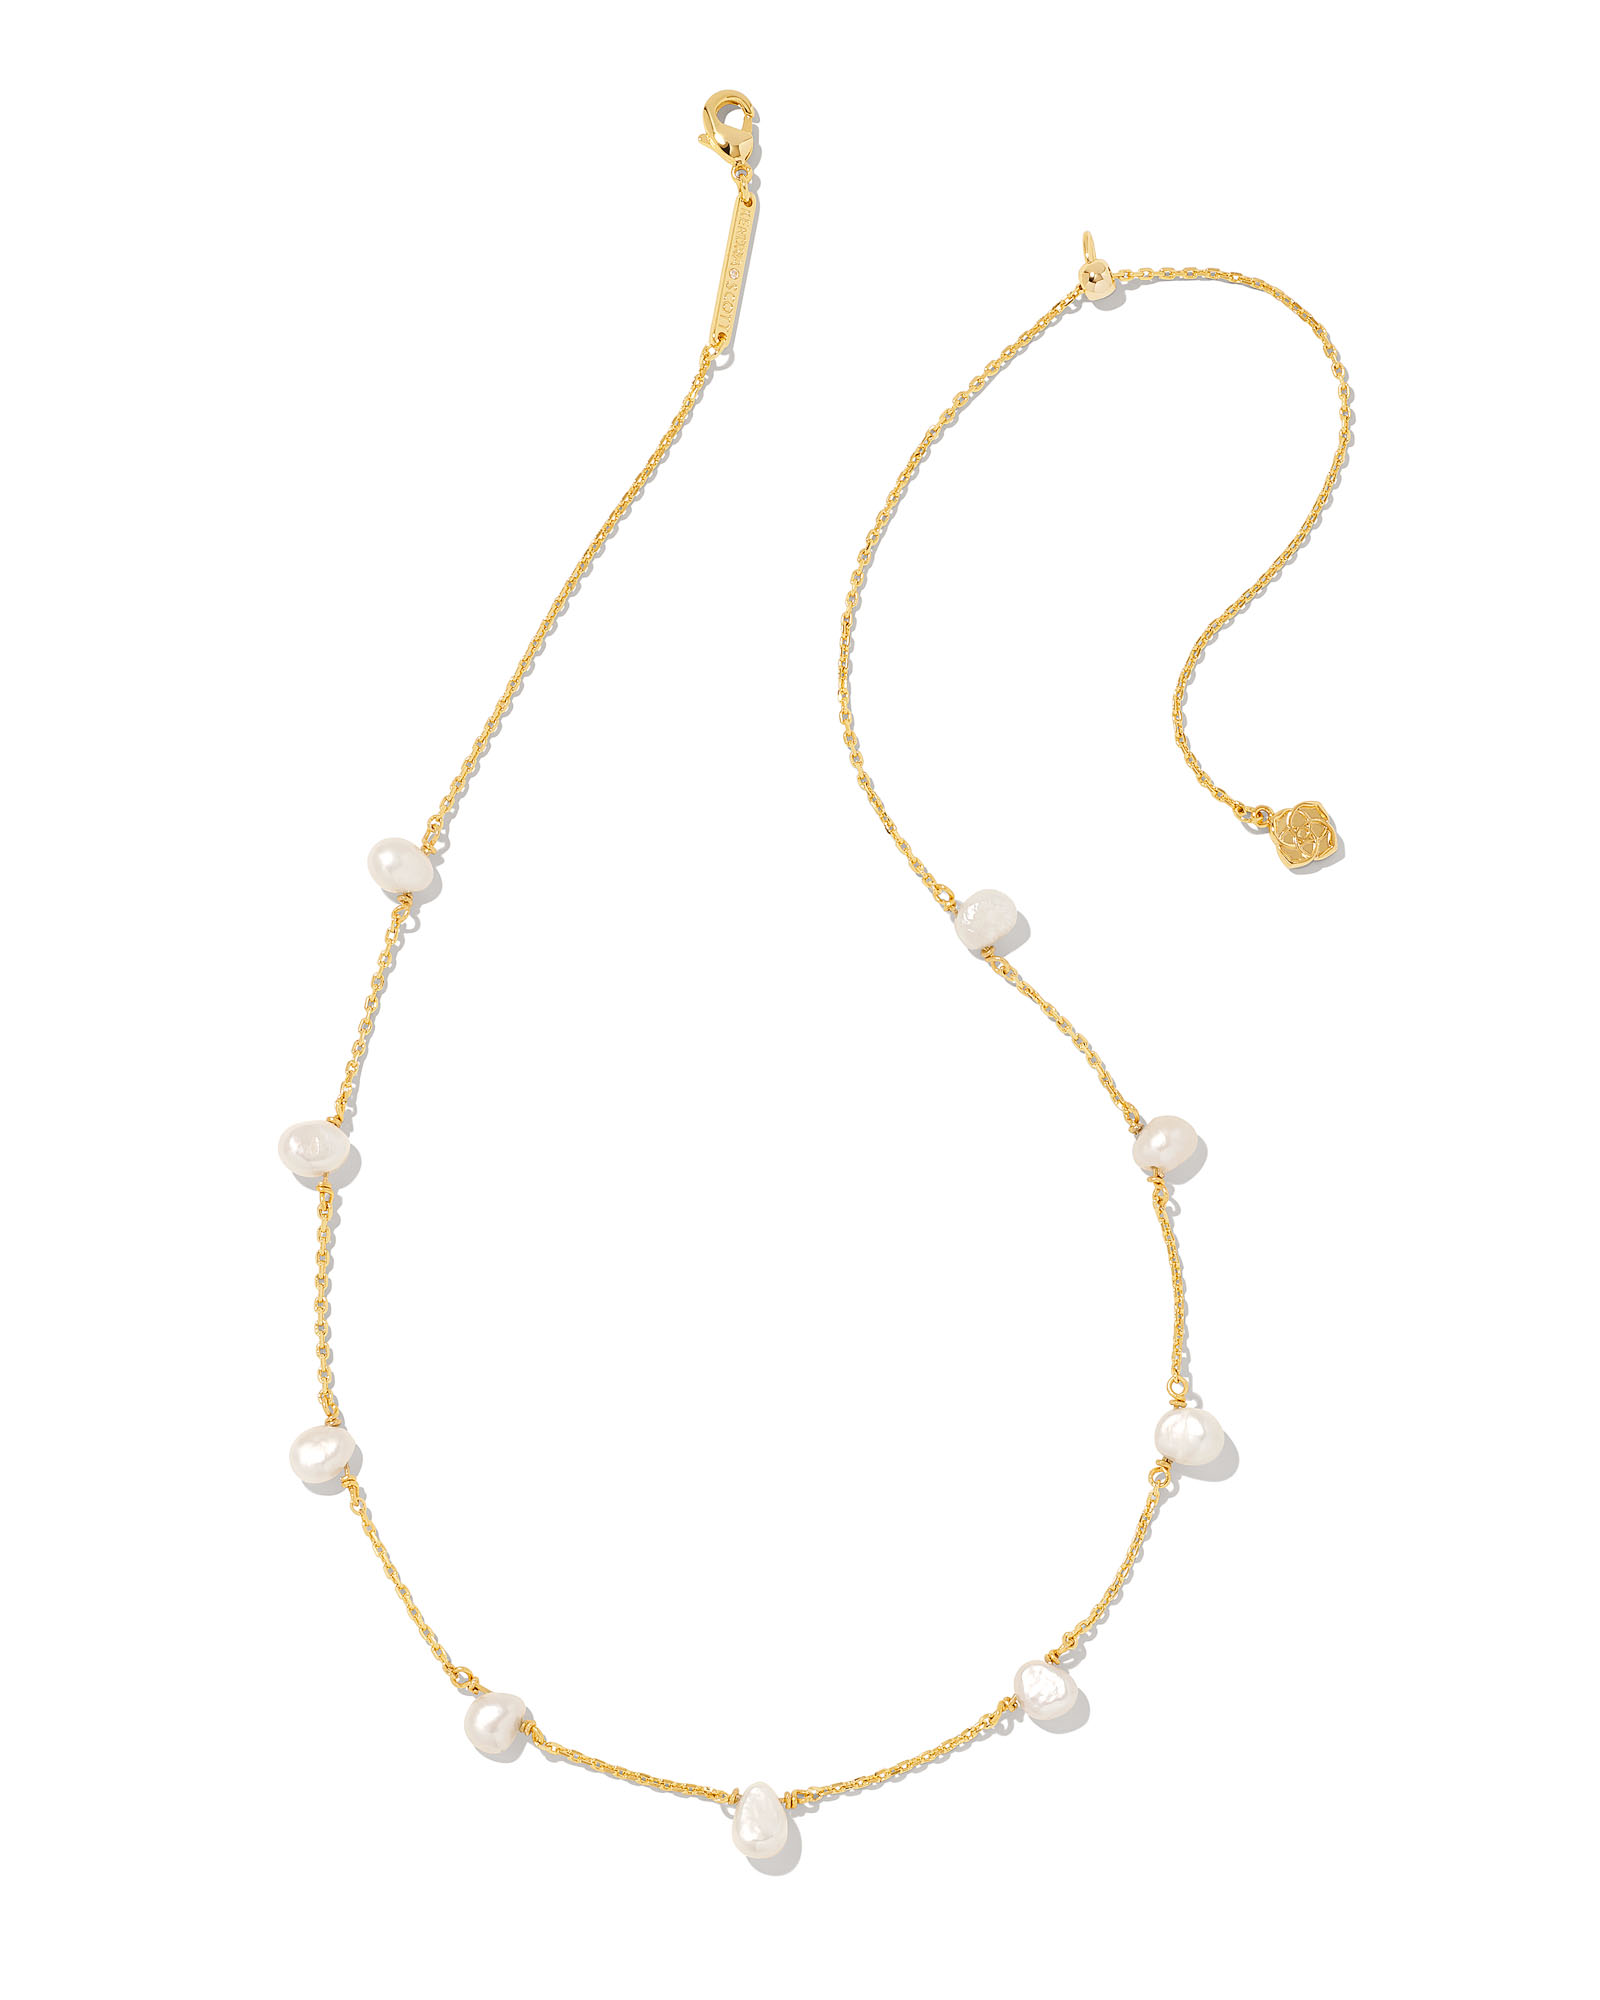 Pearl necklaces 